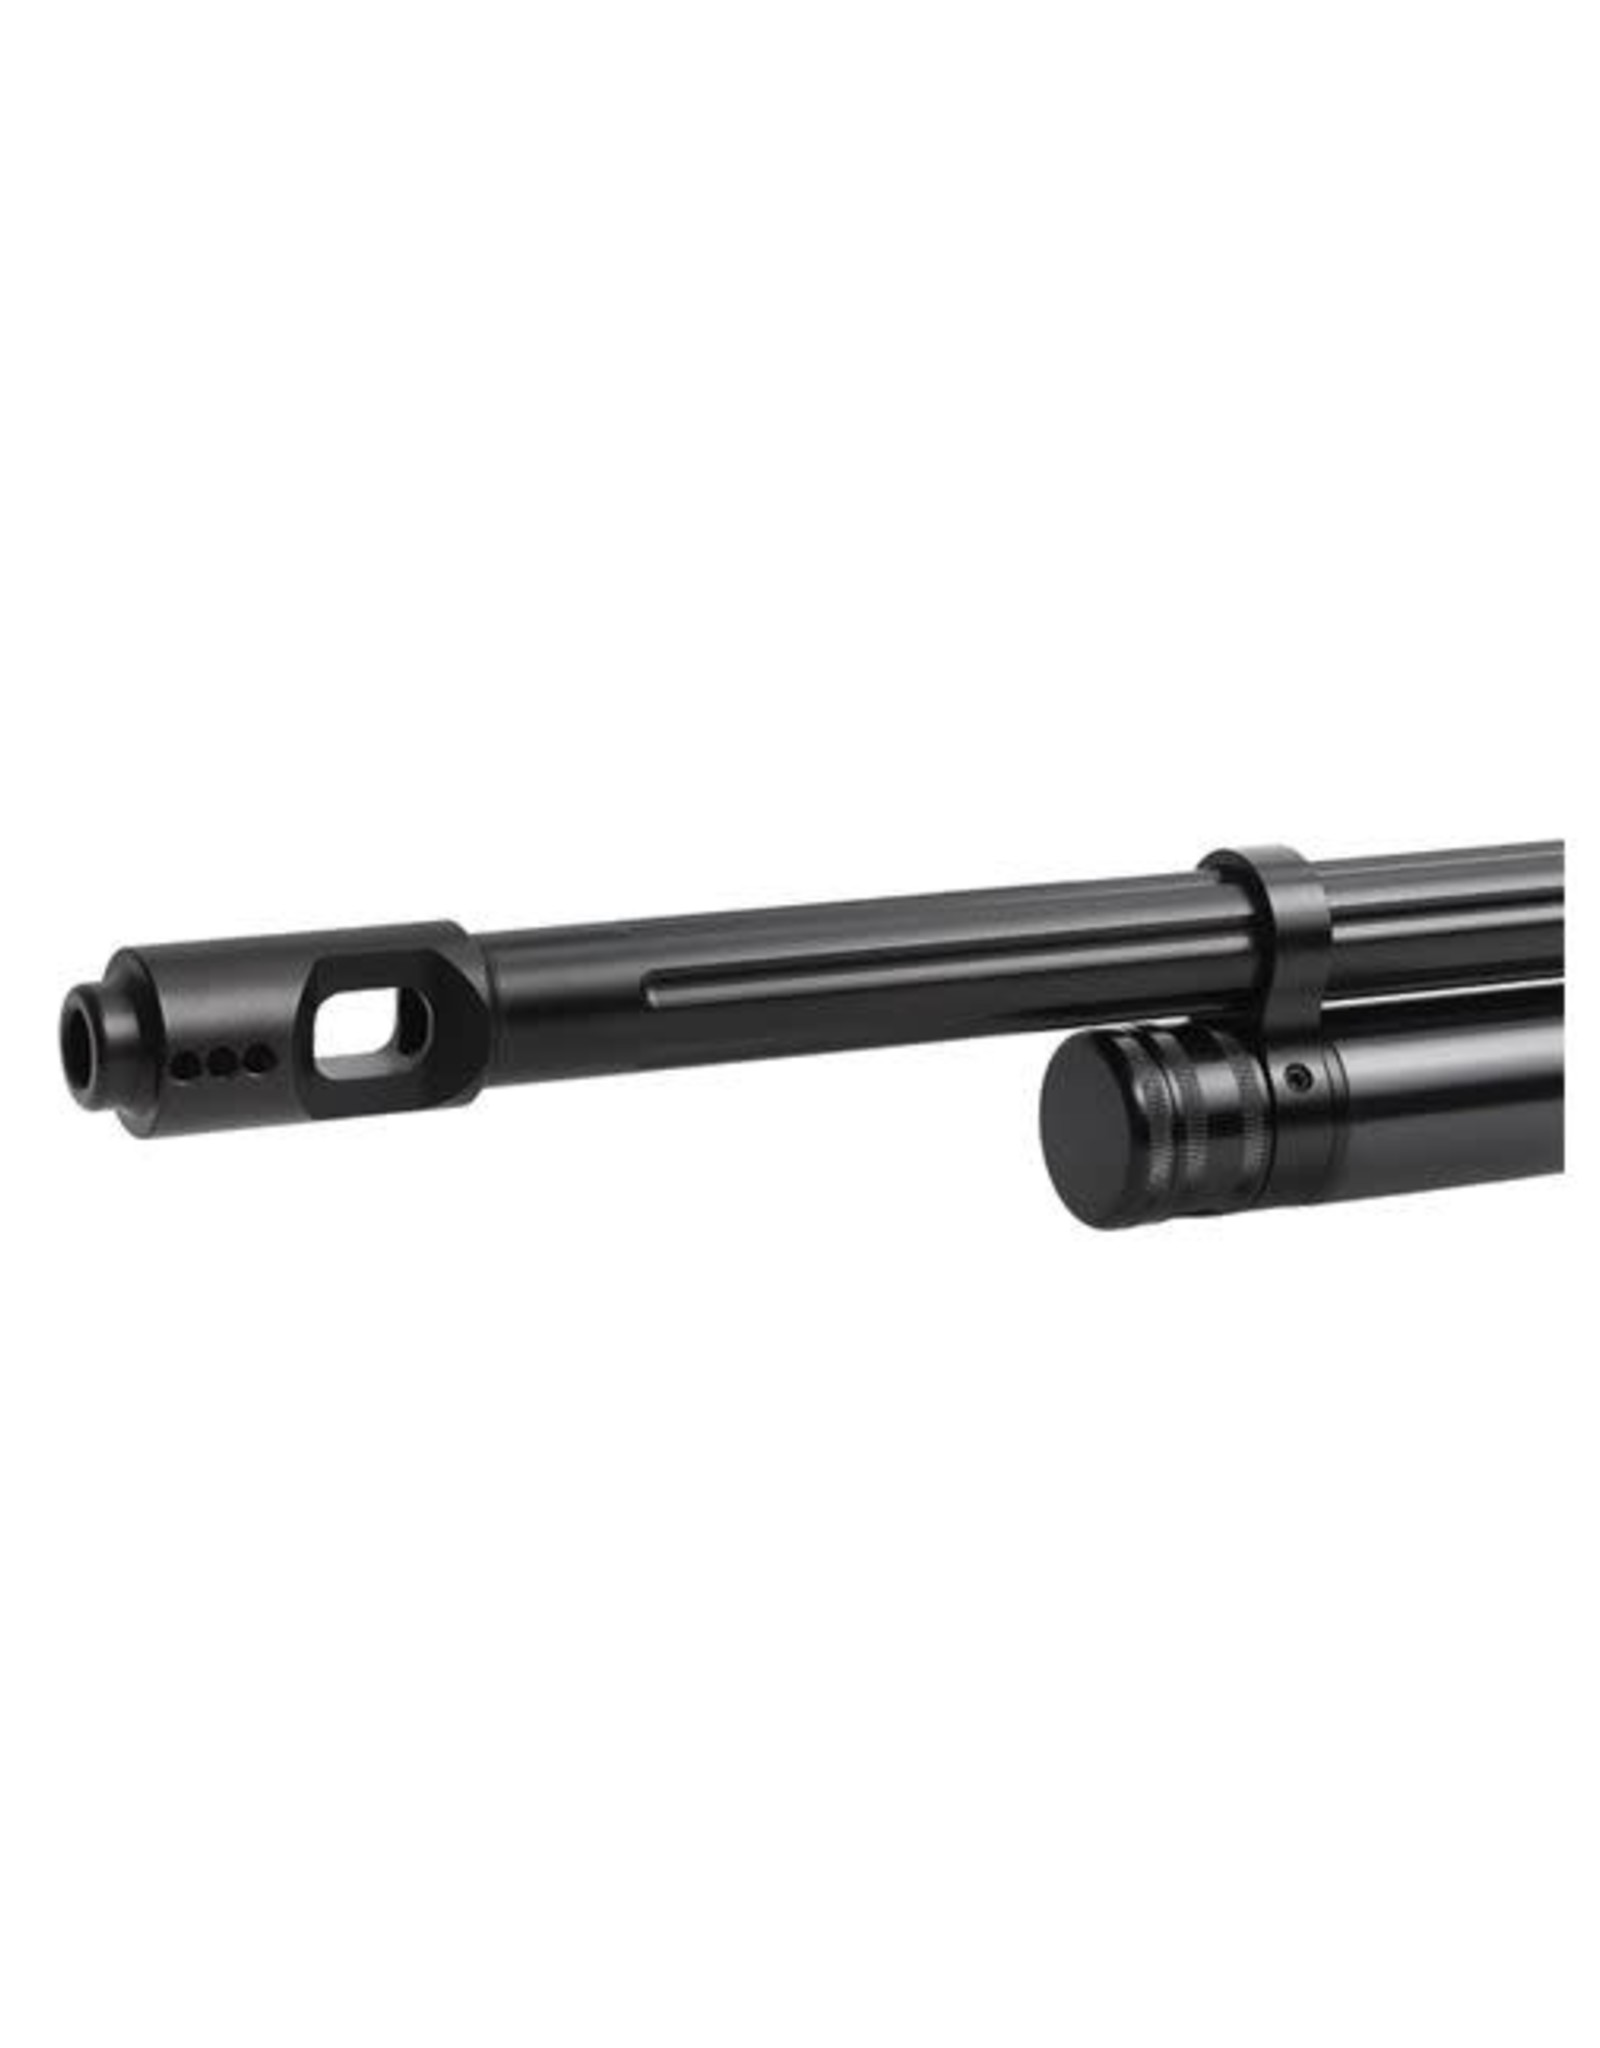 Evanix Evanix Sniper-K PCP Air Rifle with Synthetic Stock .457 Caliber (11.6mm) - 5 Round Magazine